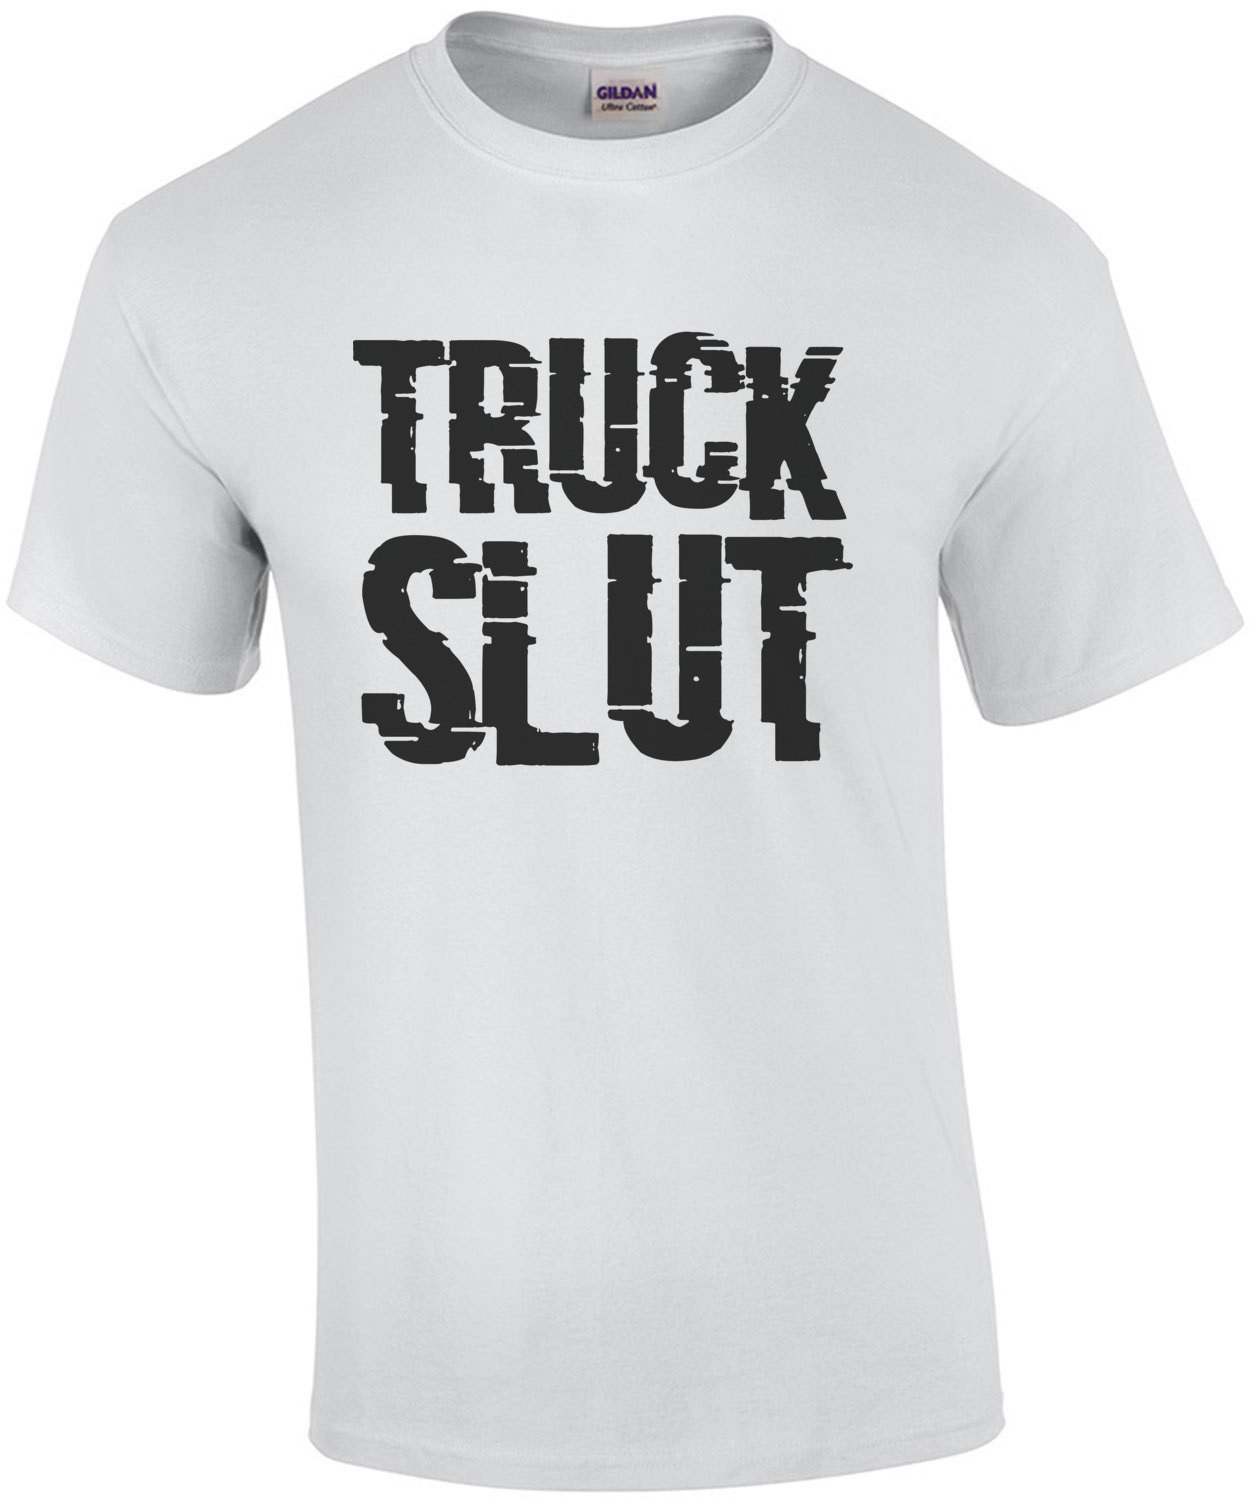 Truck Slut - funny t-shirt